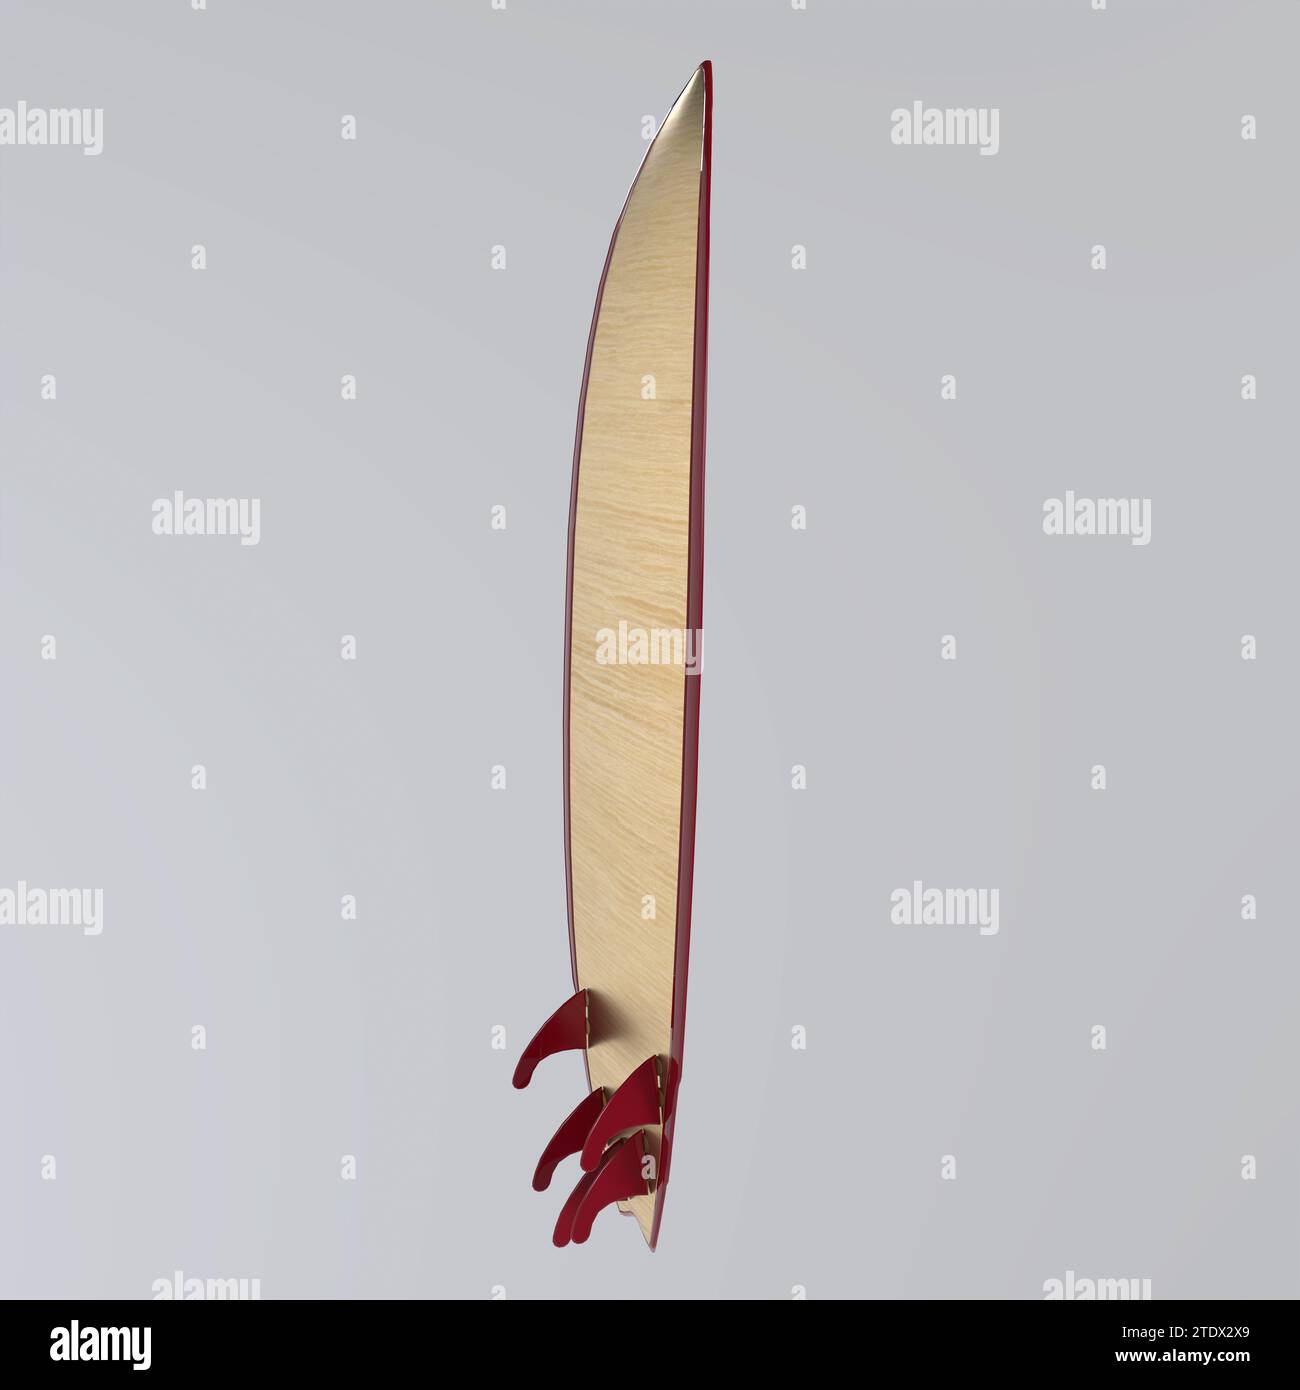 Tavola da surf isolata su sfondo bianco Foto Stock